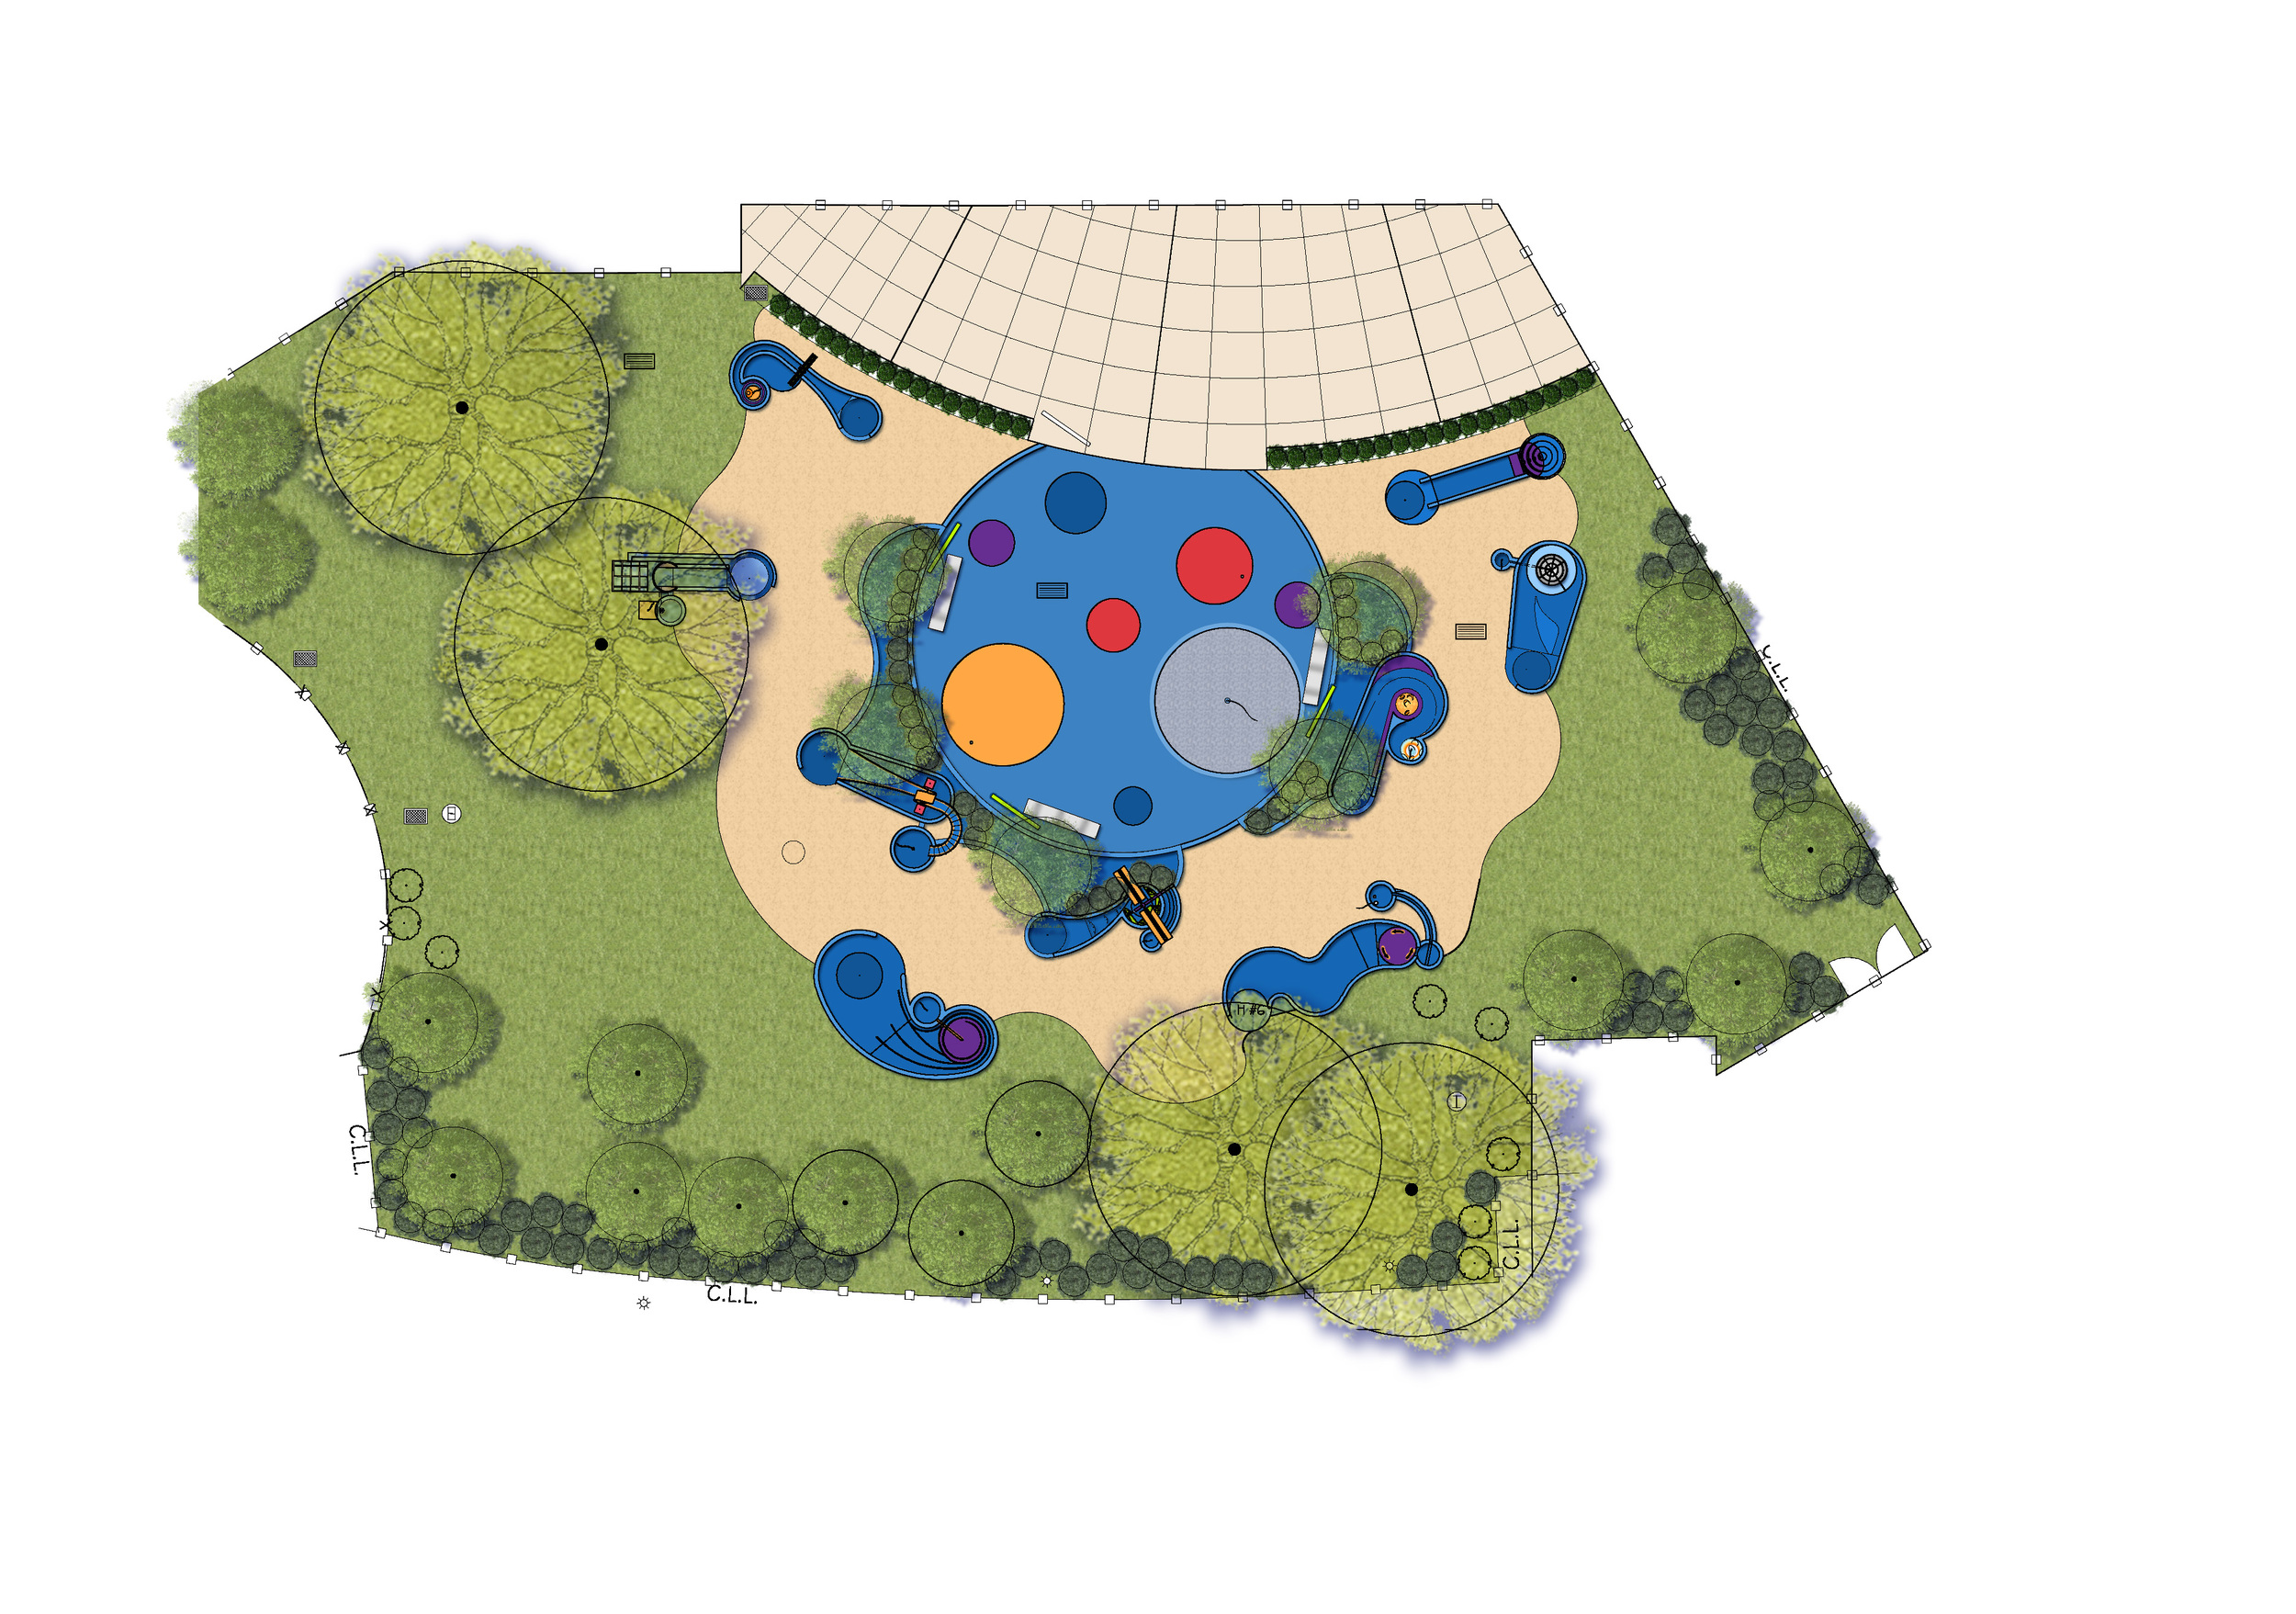 rocket park plan for website.jpg